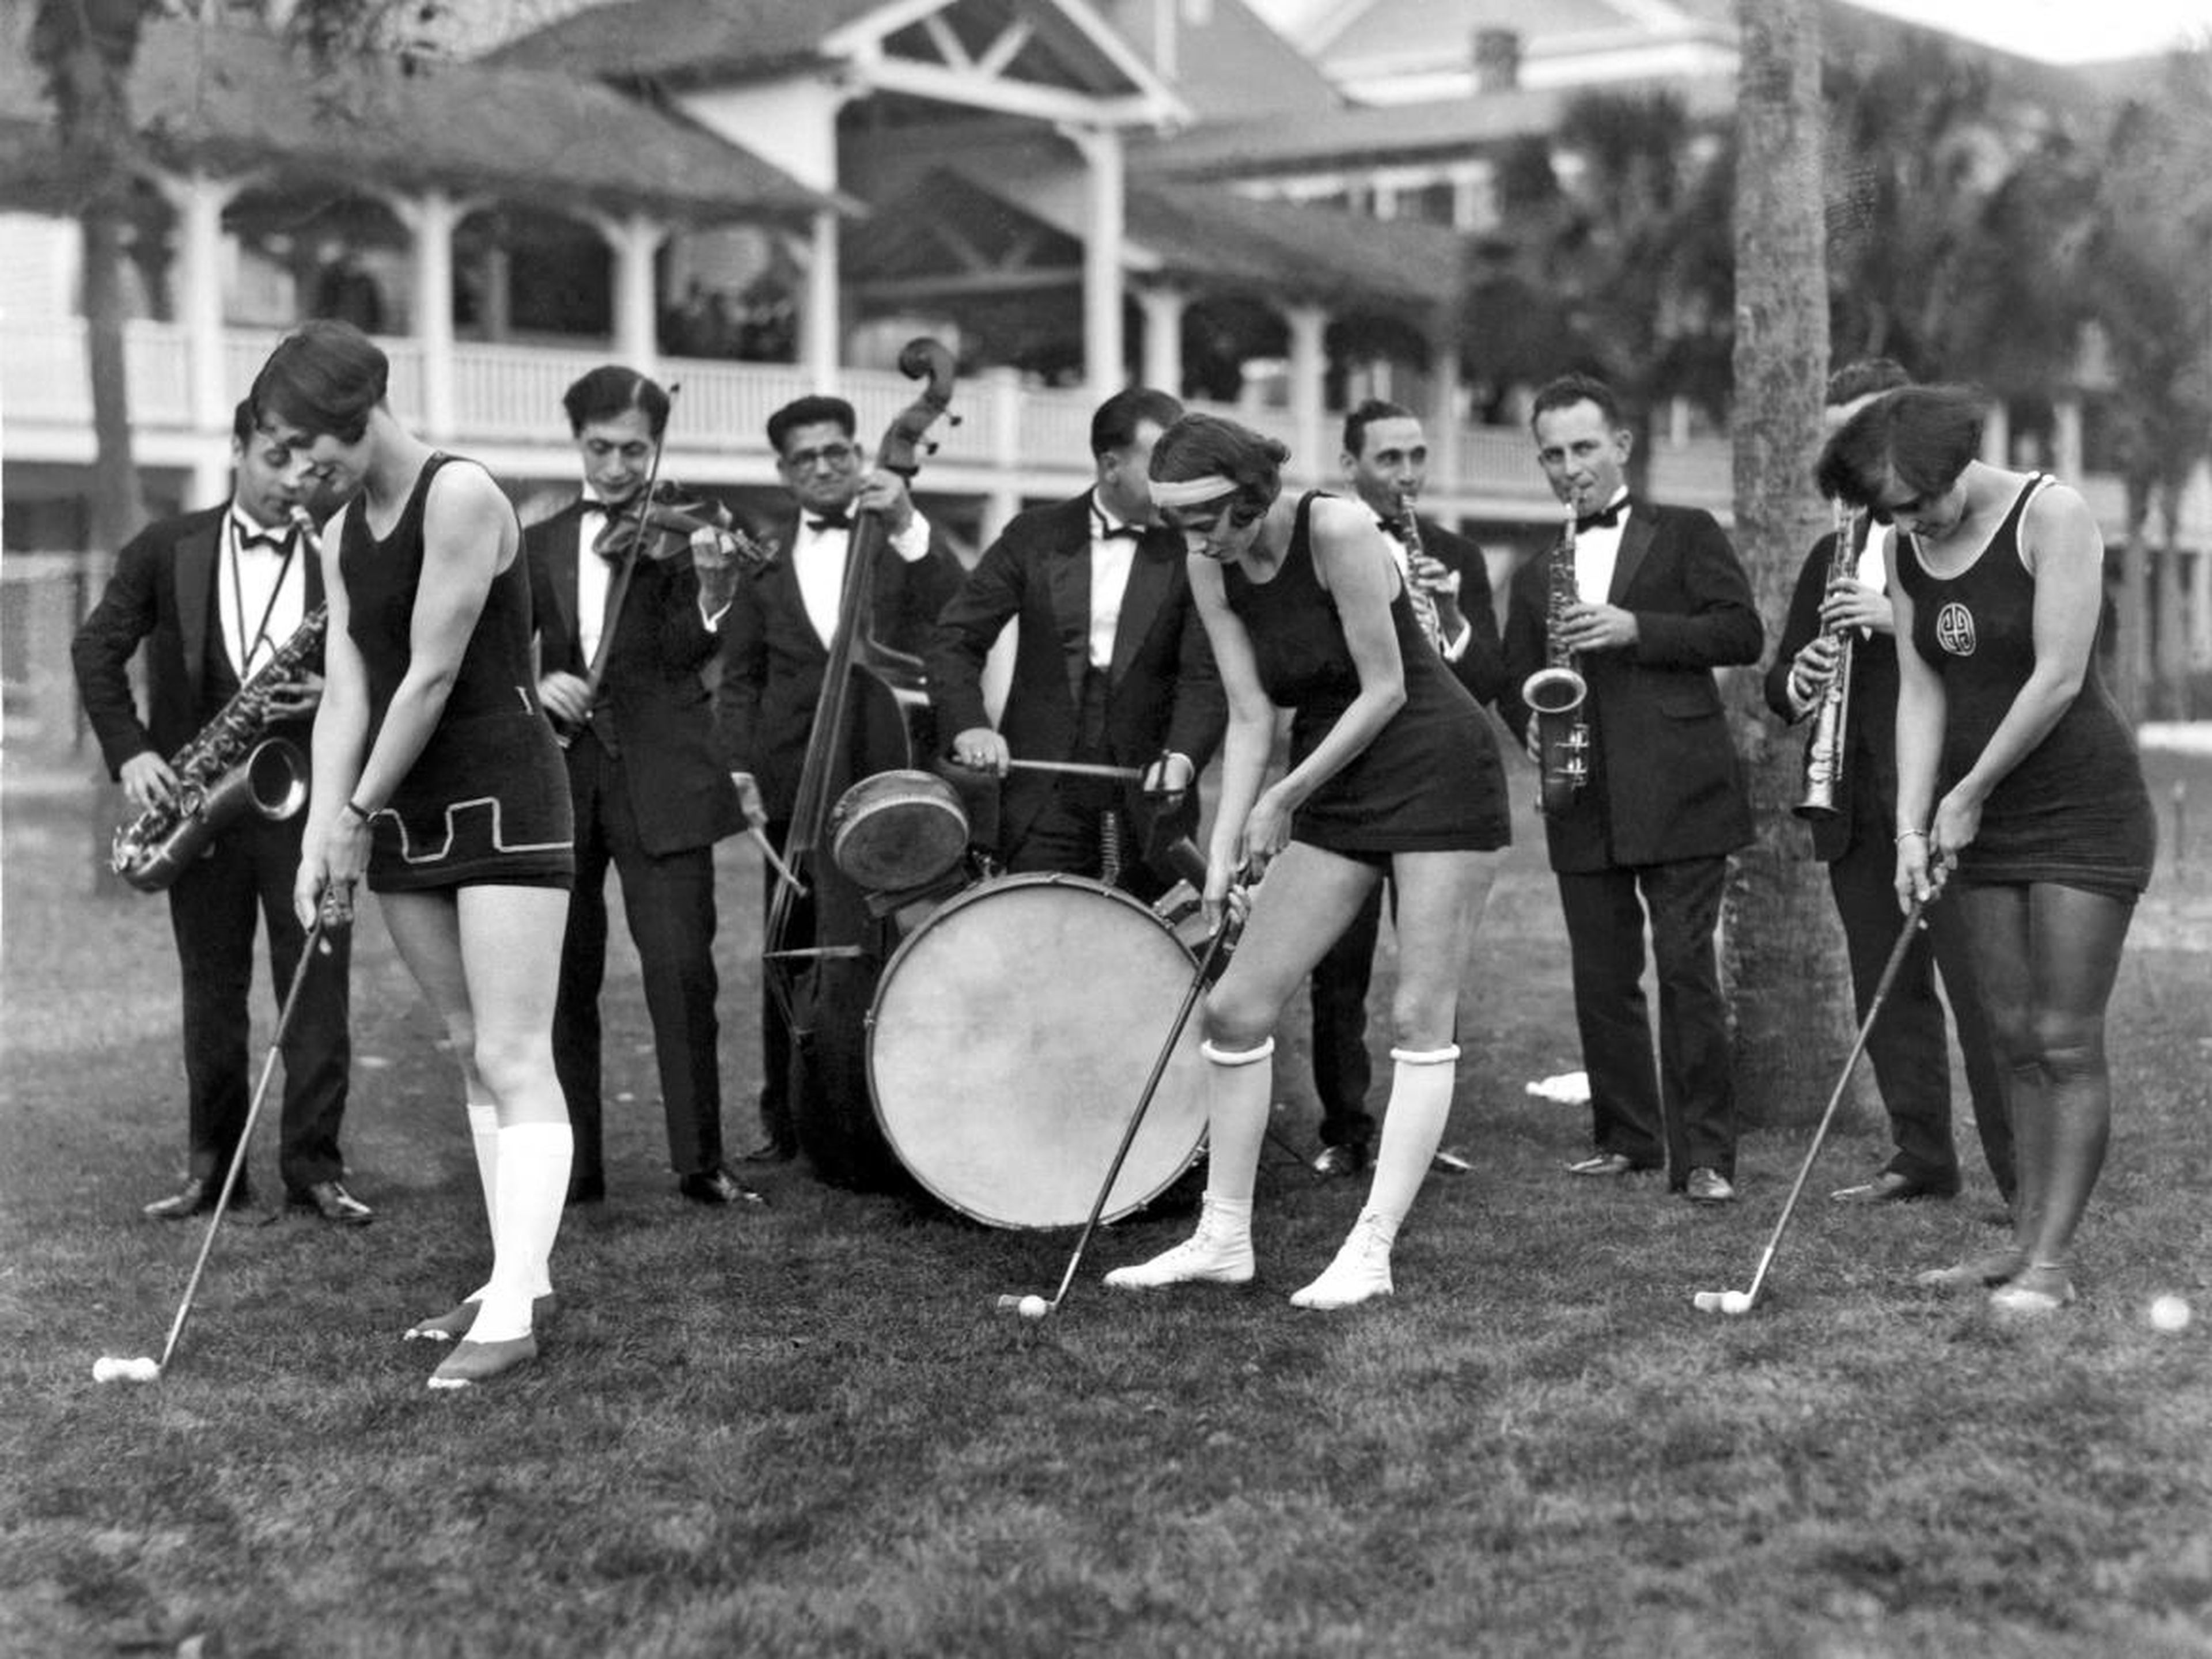 Golf instructors teach golf using jazz in Ormond Beach, Florida, circa 1926.